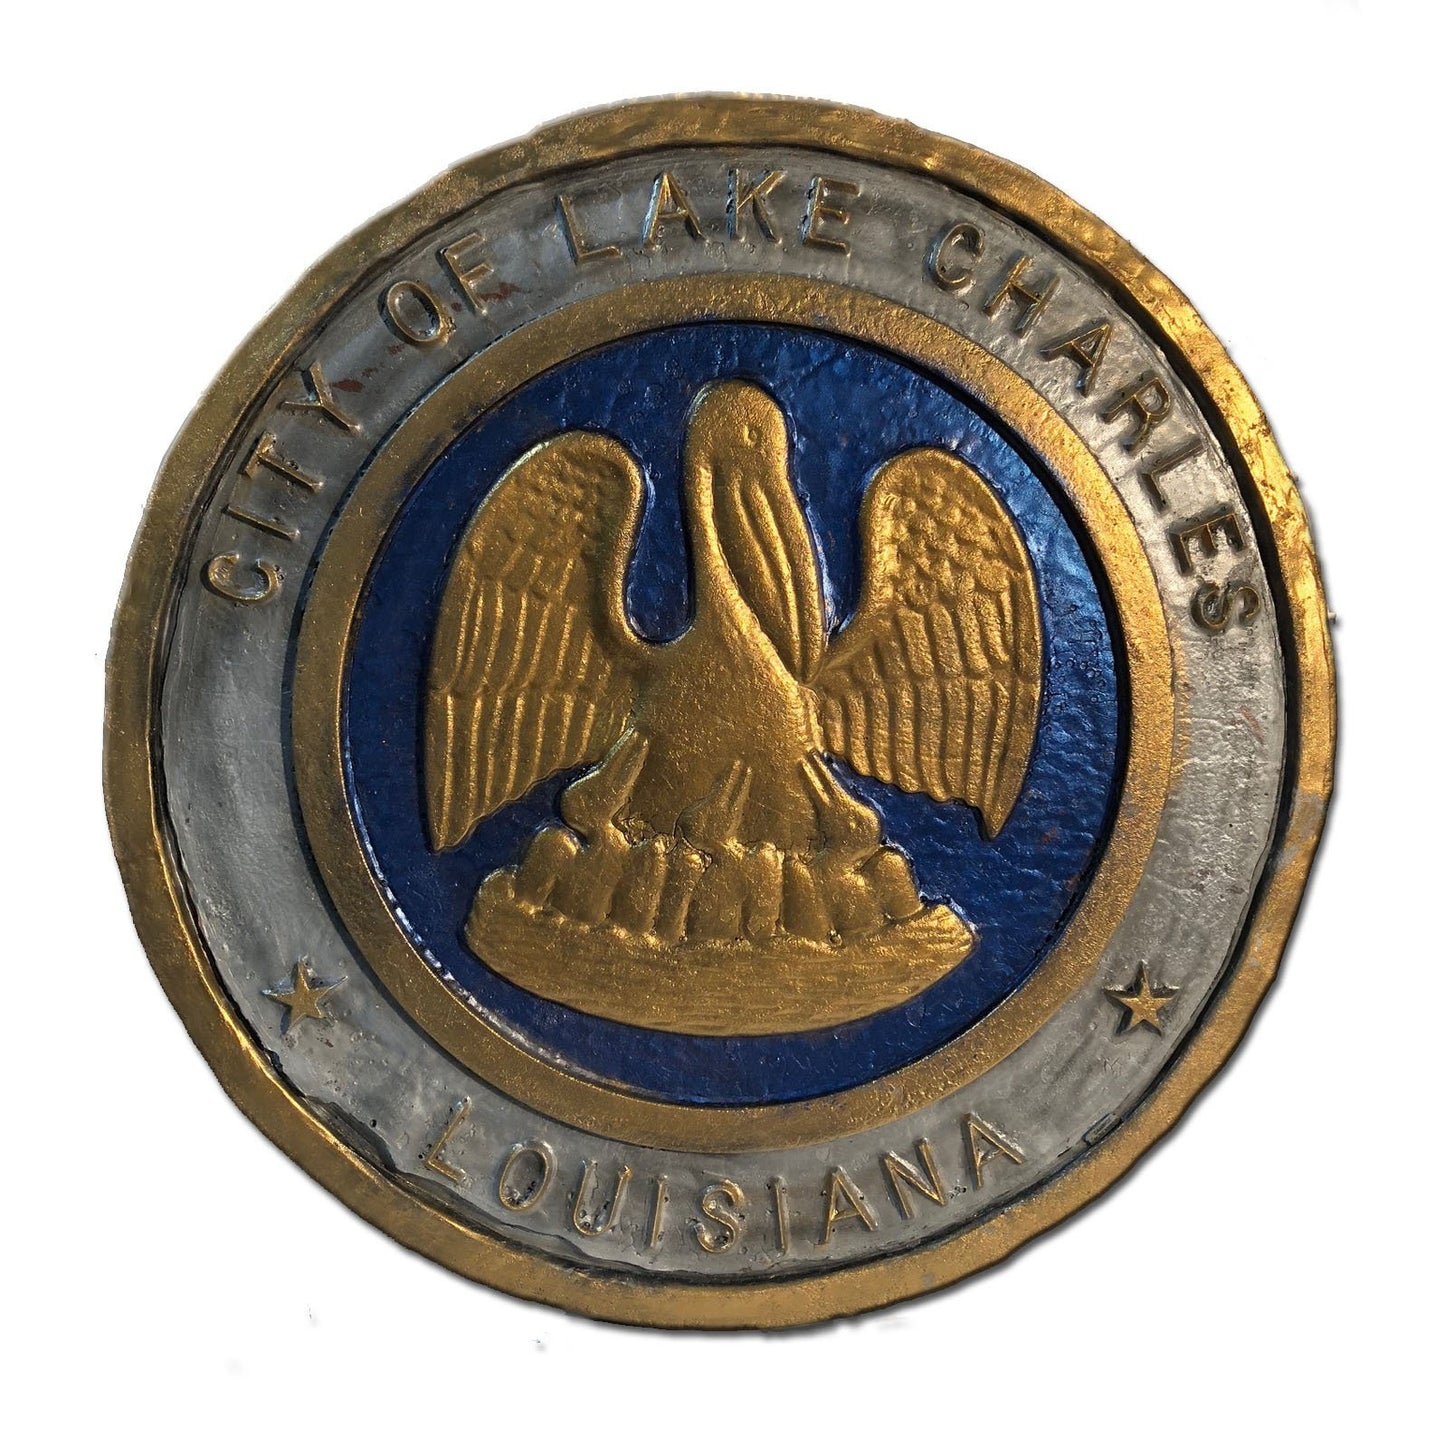 Louisiana Drainage Seal